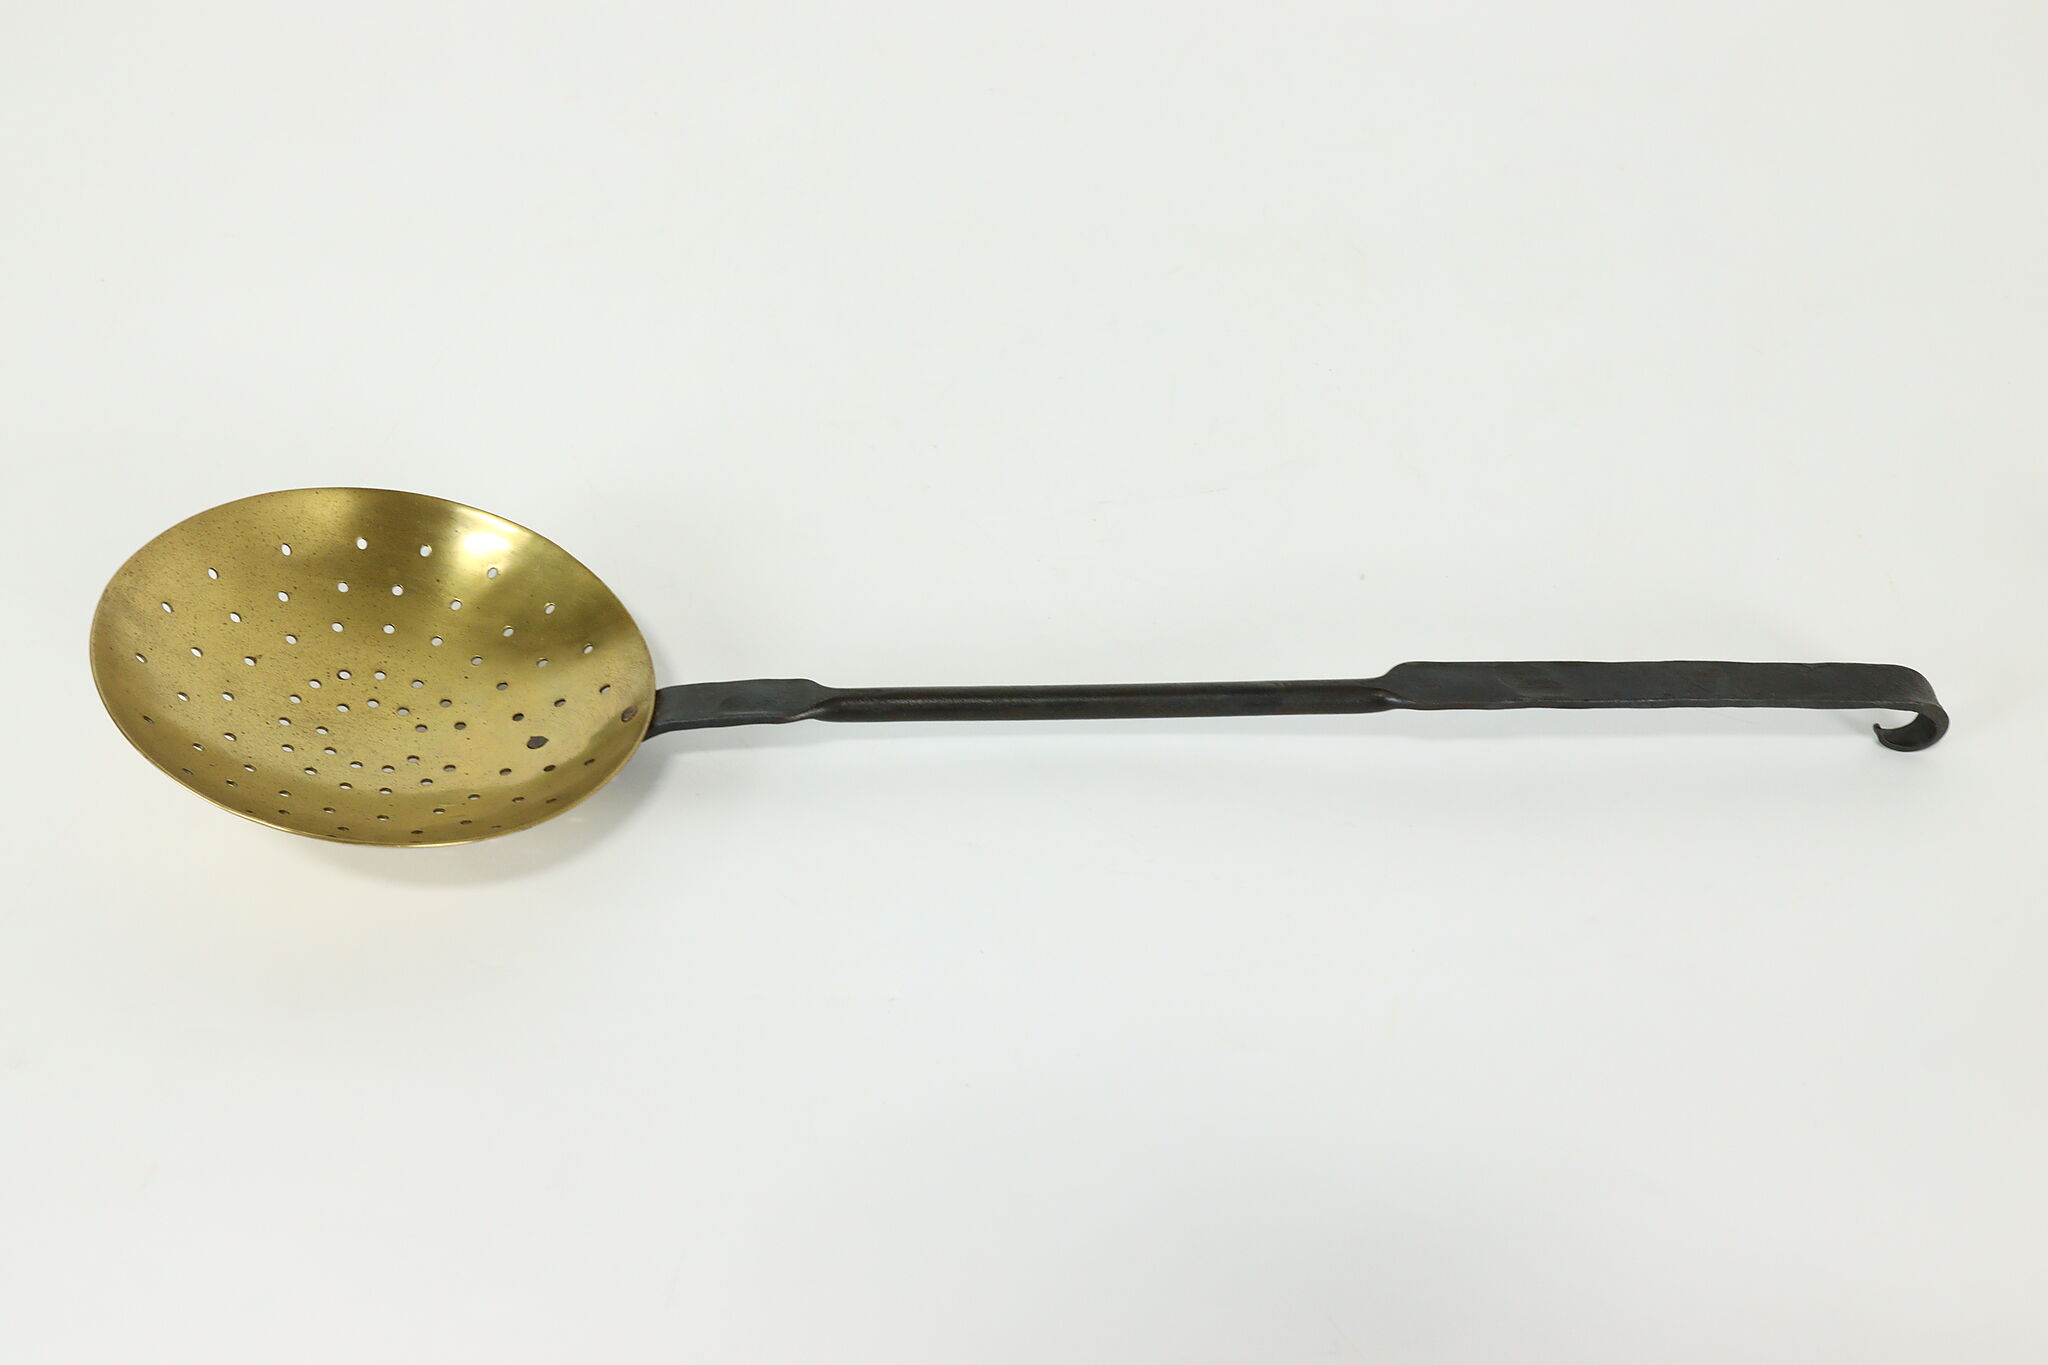 3 Sizes of Vintage French Strainer/Skimmer Spoons